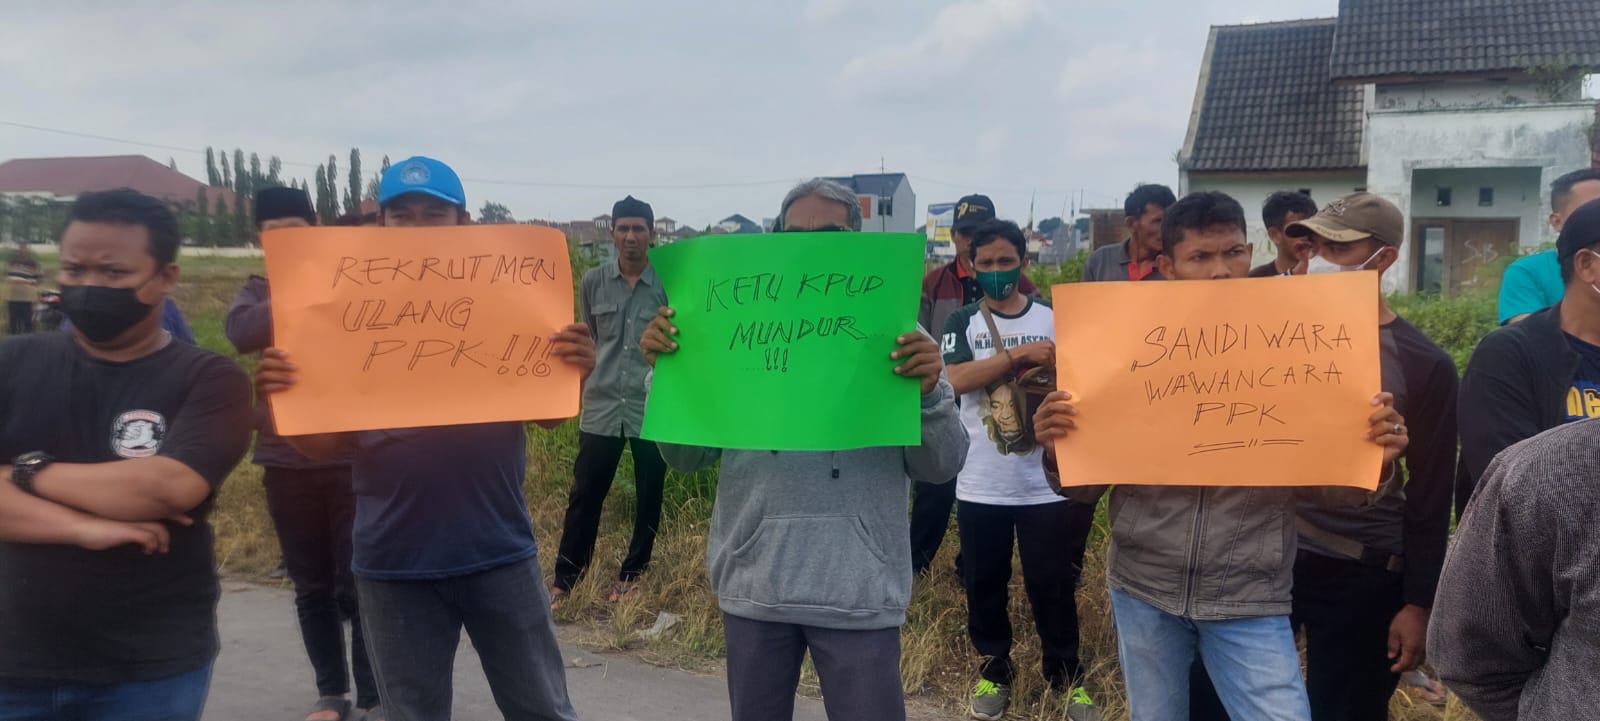 Puluhan Massa Demo KPU Kabupaten Tegal, Protes Hasil Seleksi PPK